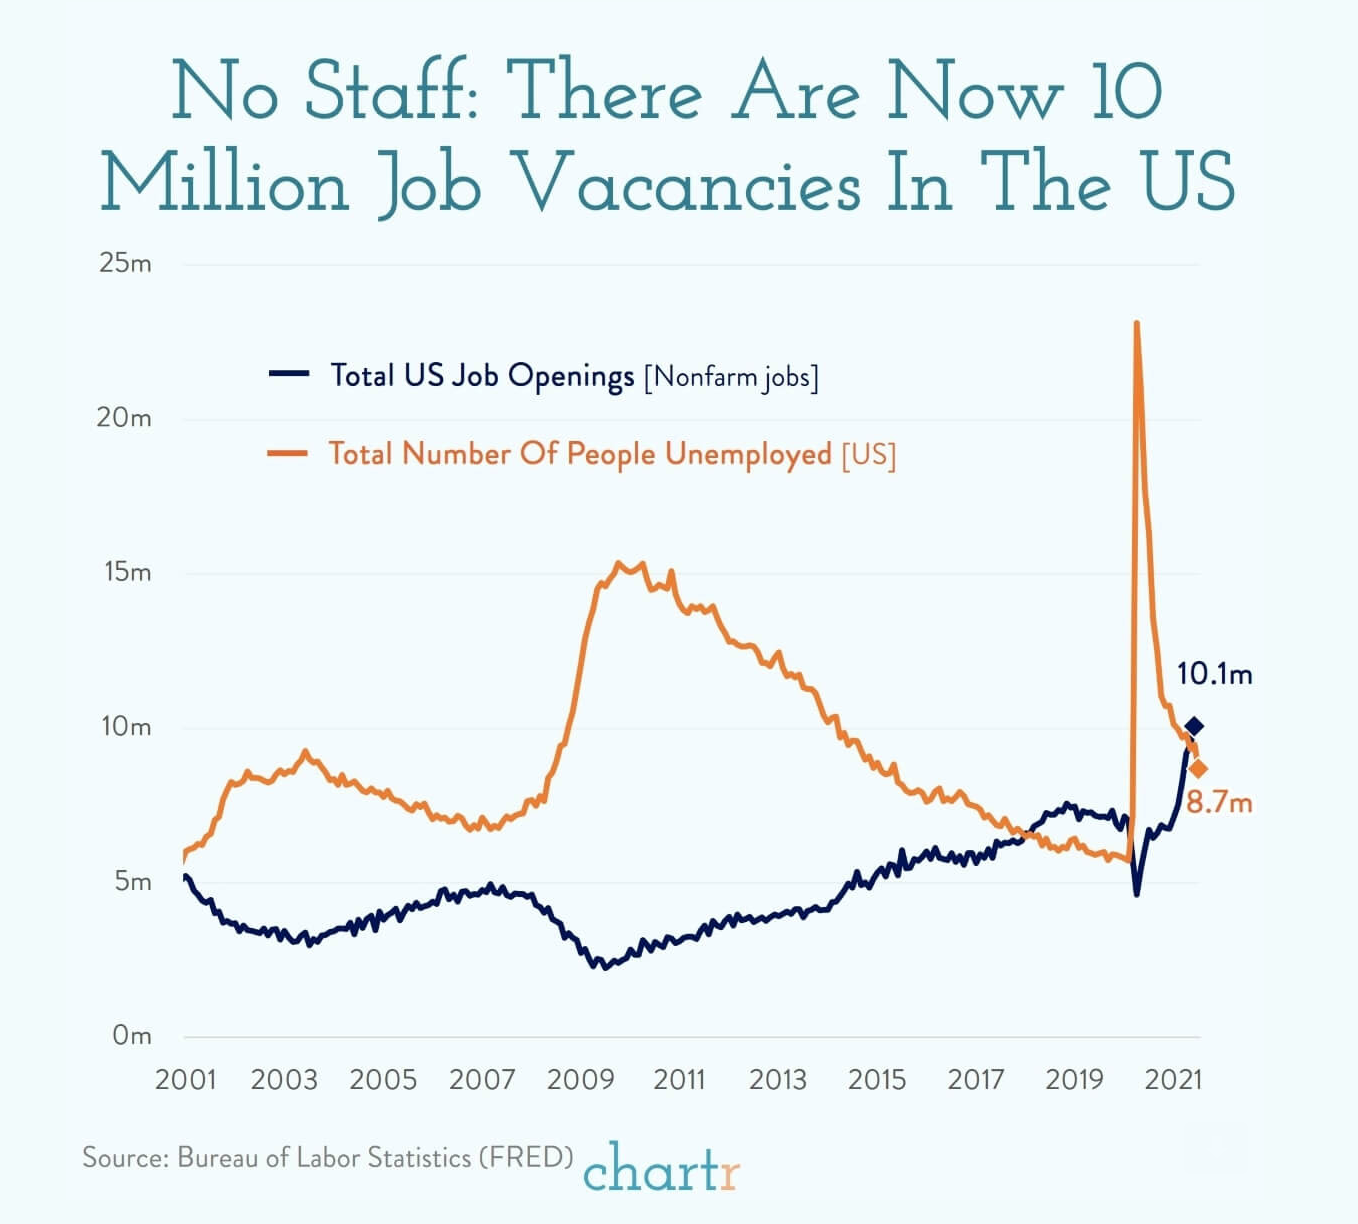 No Staff - 10 M job vacancies in the US